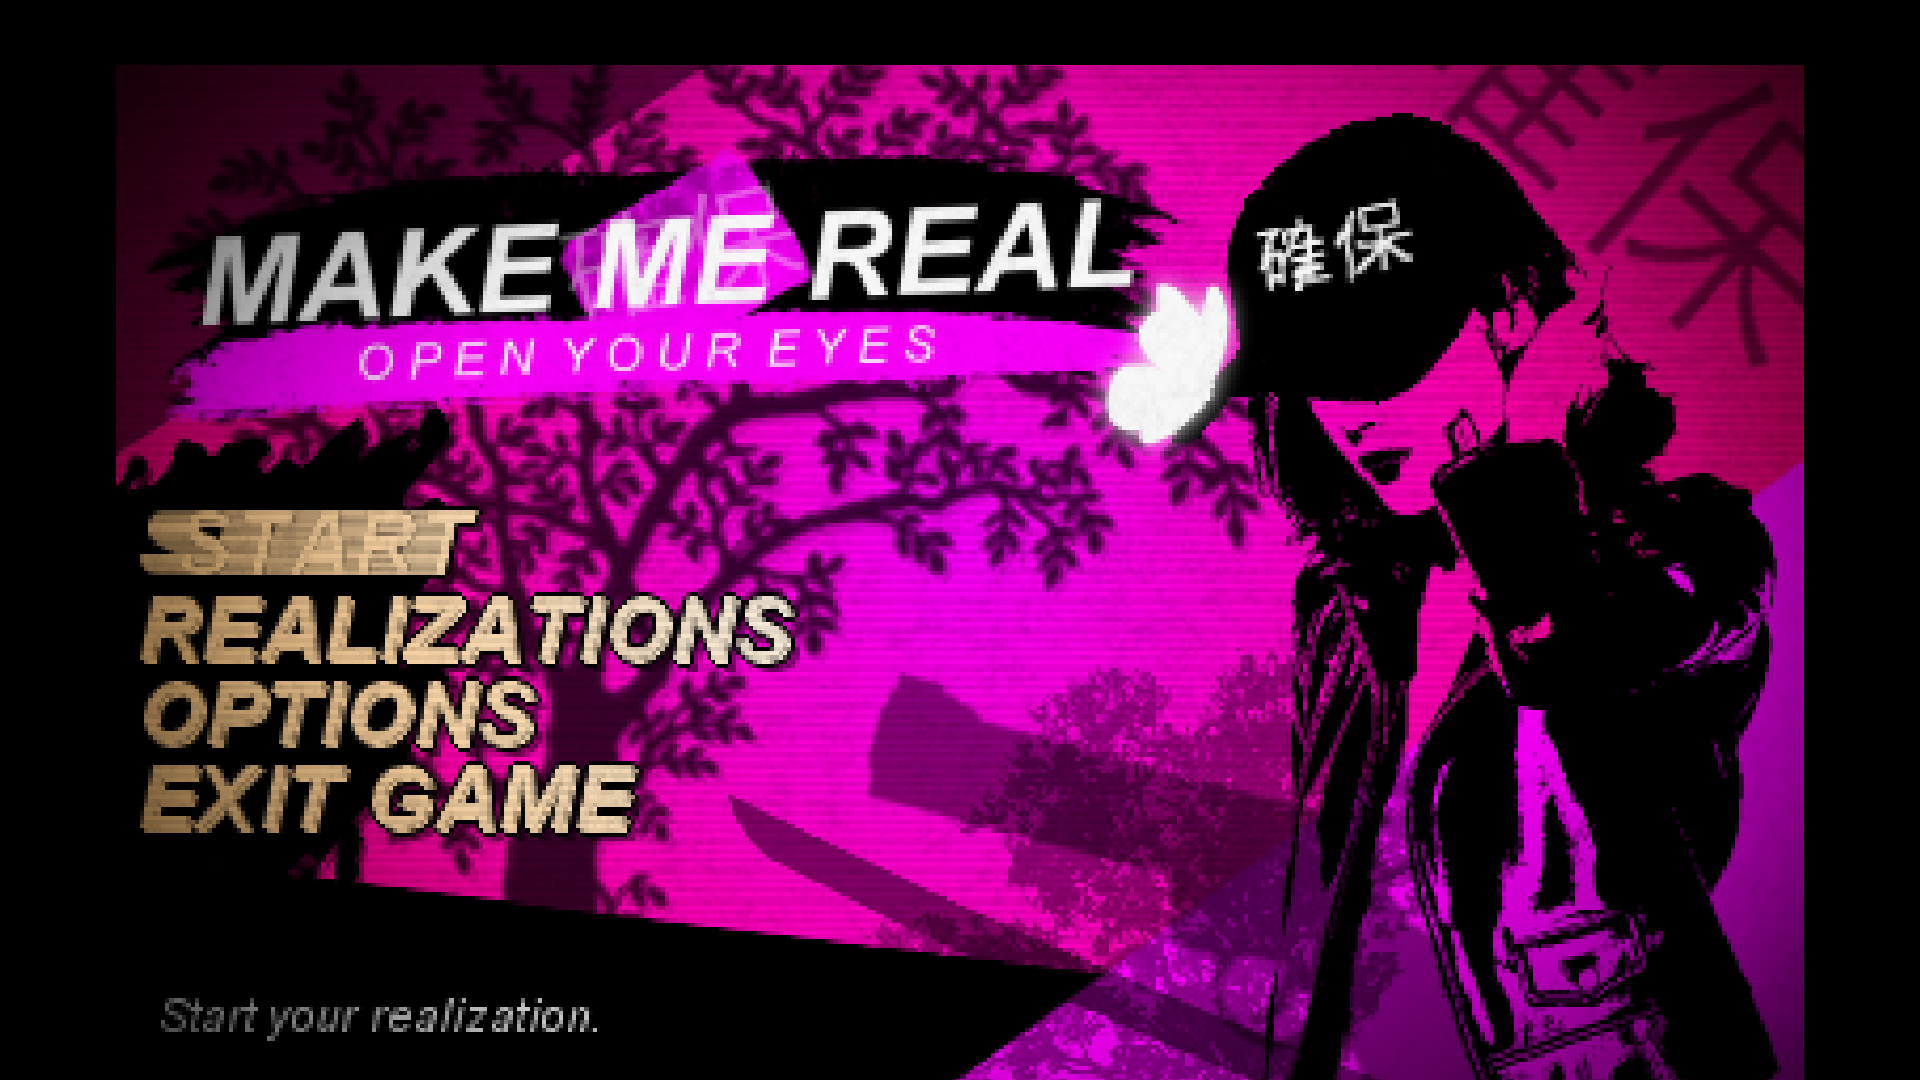 Me real games. Make me real. Make me real open your Eyes. Riaru make me real. Make me real rainpour.